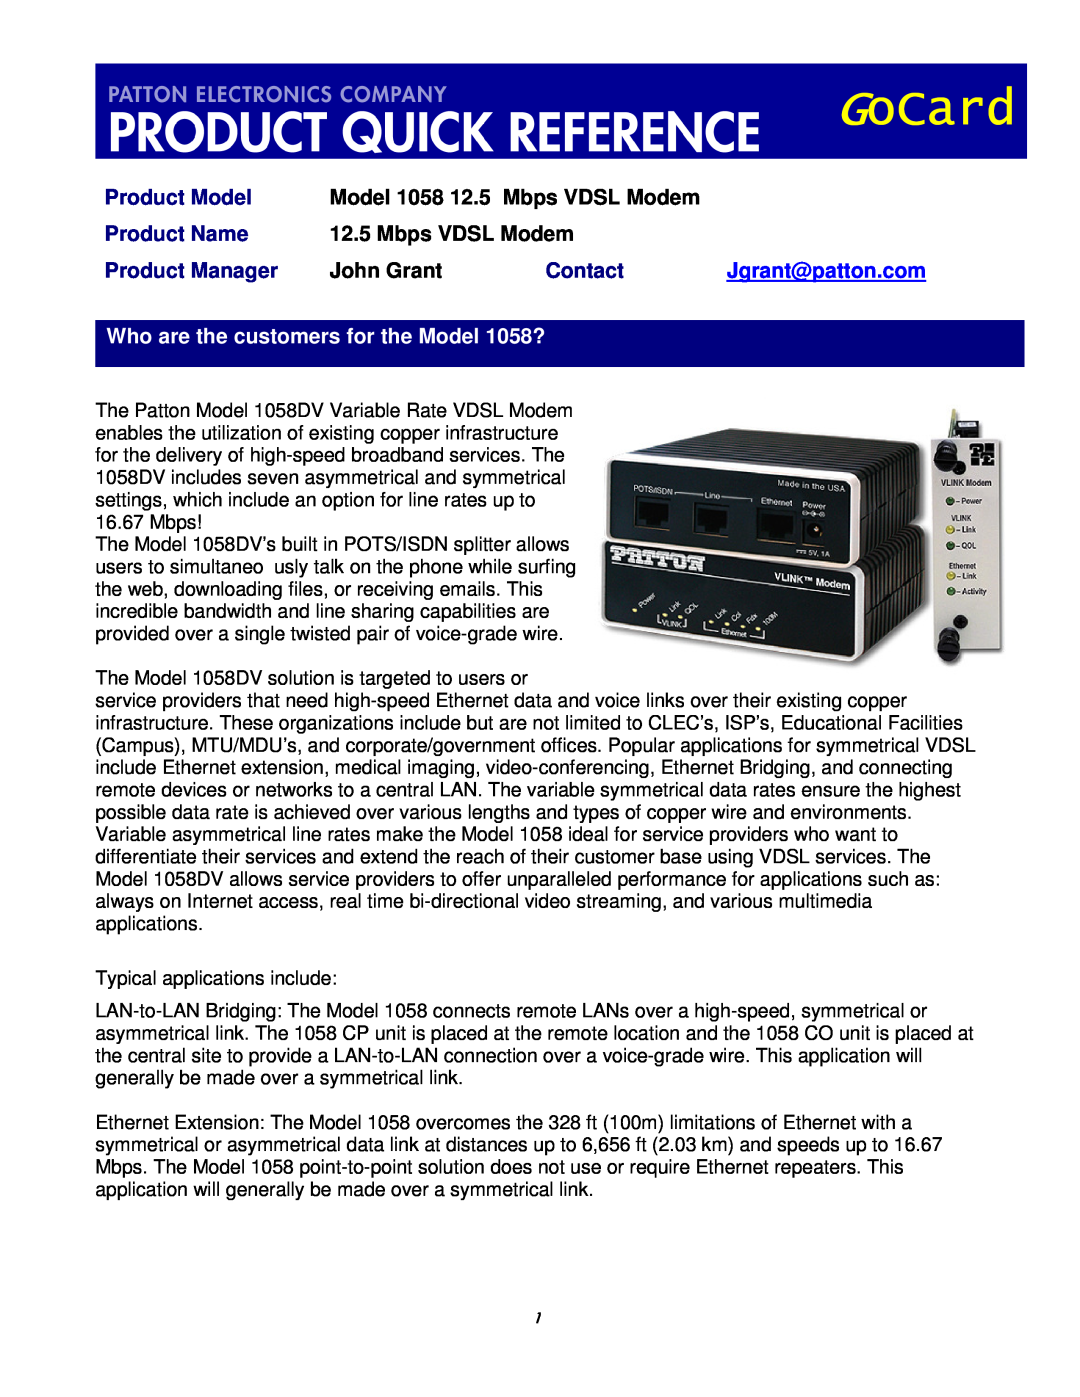 Patton electronic user manual Model, VLINK Modem, Part# 07M1058-B, Doc# 058091UB, Revised 6/10/02 